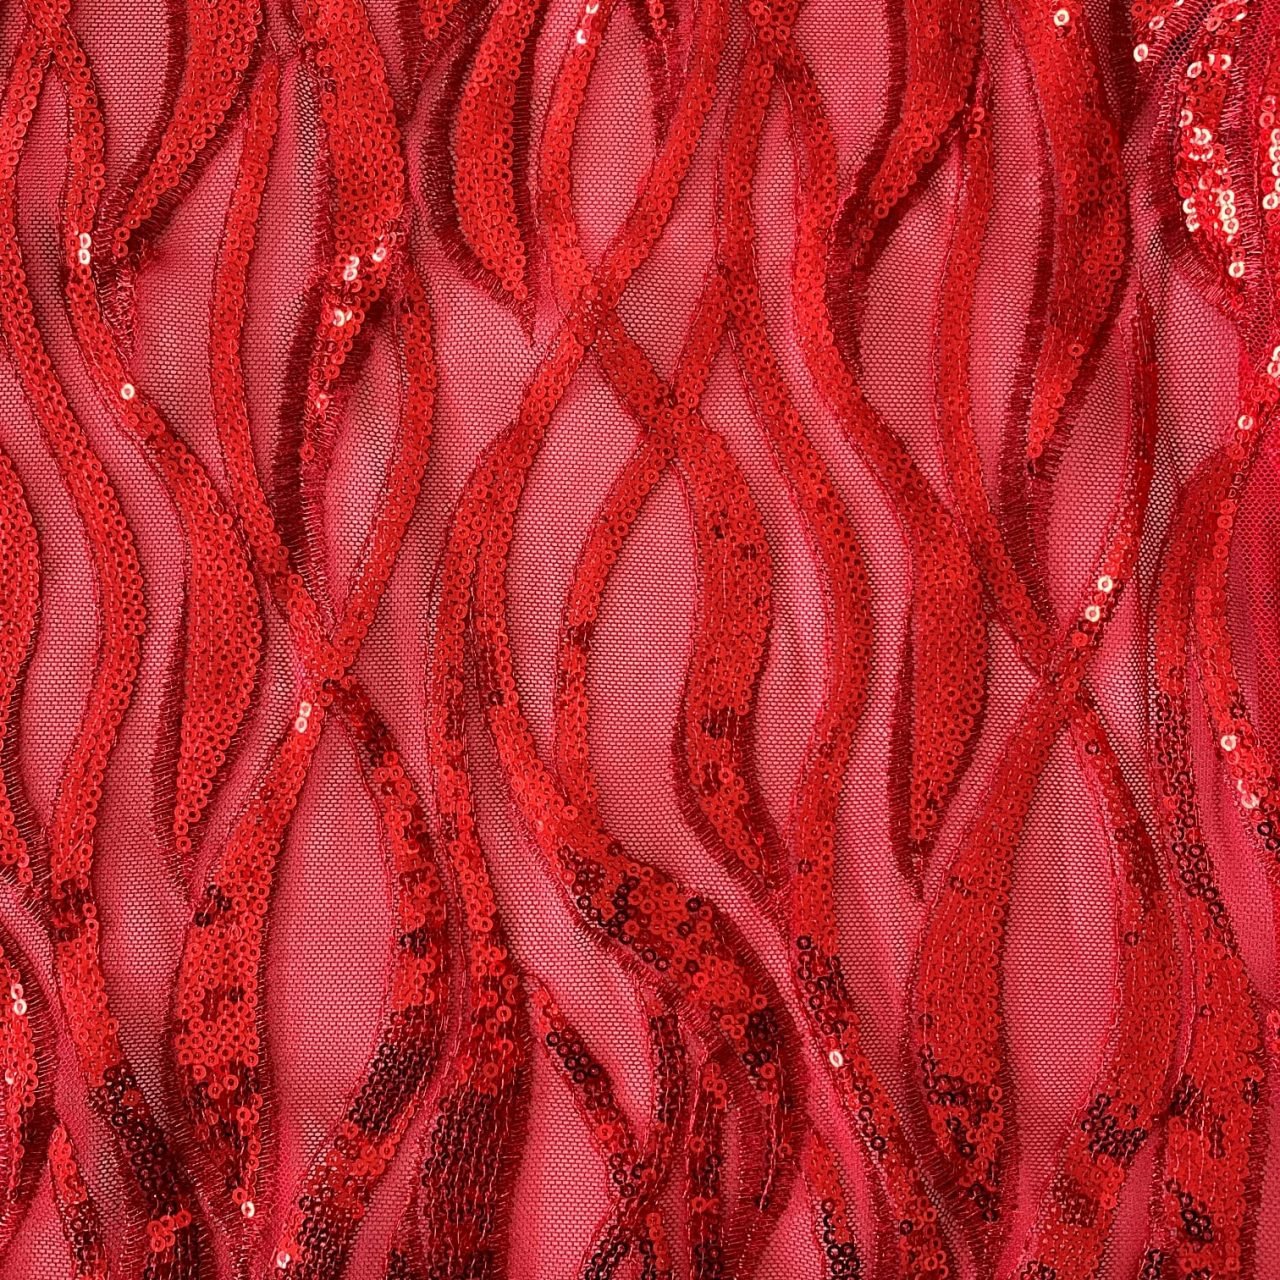 https://www.solidstonefabrics.com/wp-content/uploads/2018/06/ADMIRE-SEQUIN-MESH-RED-SEQUIN-MESH-FABRIC-BY-THE-YARD.jpg